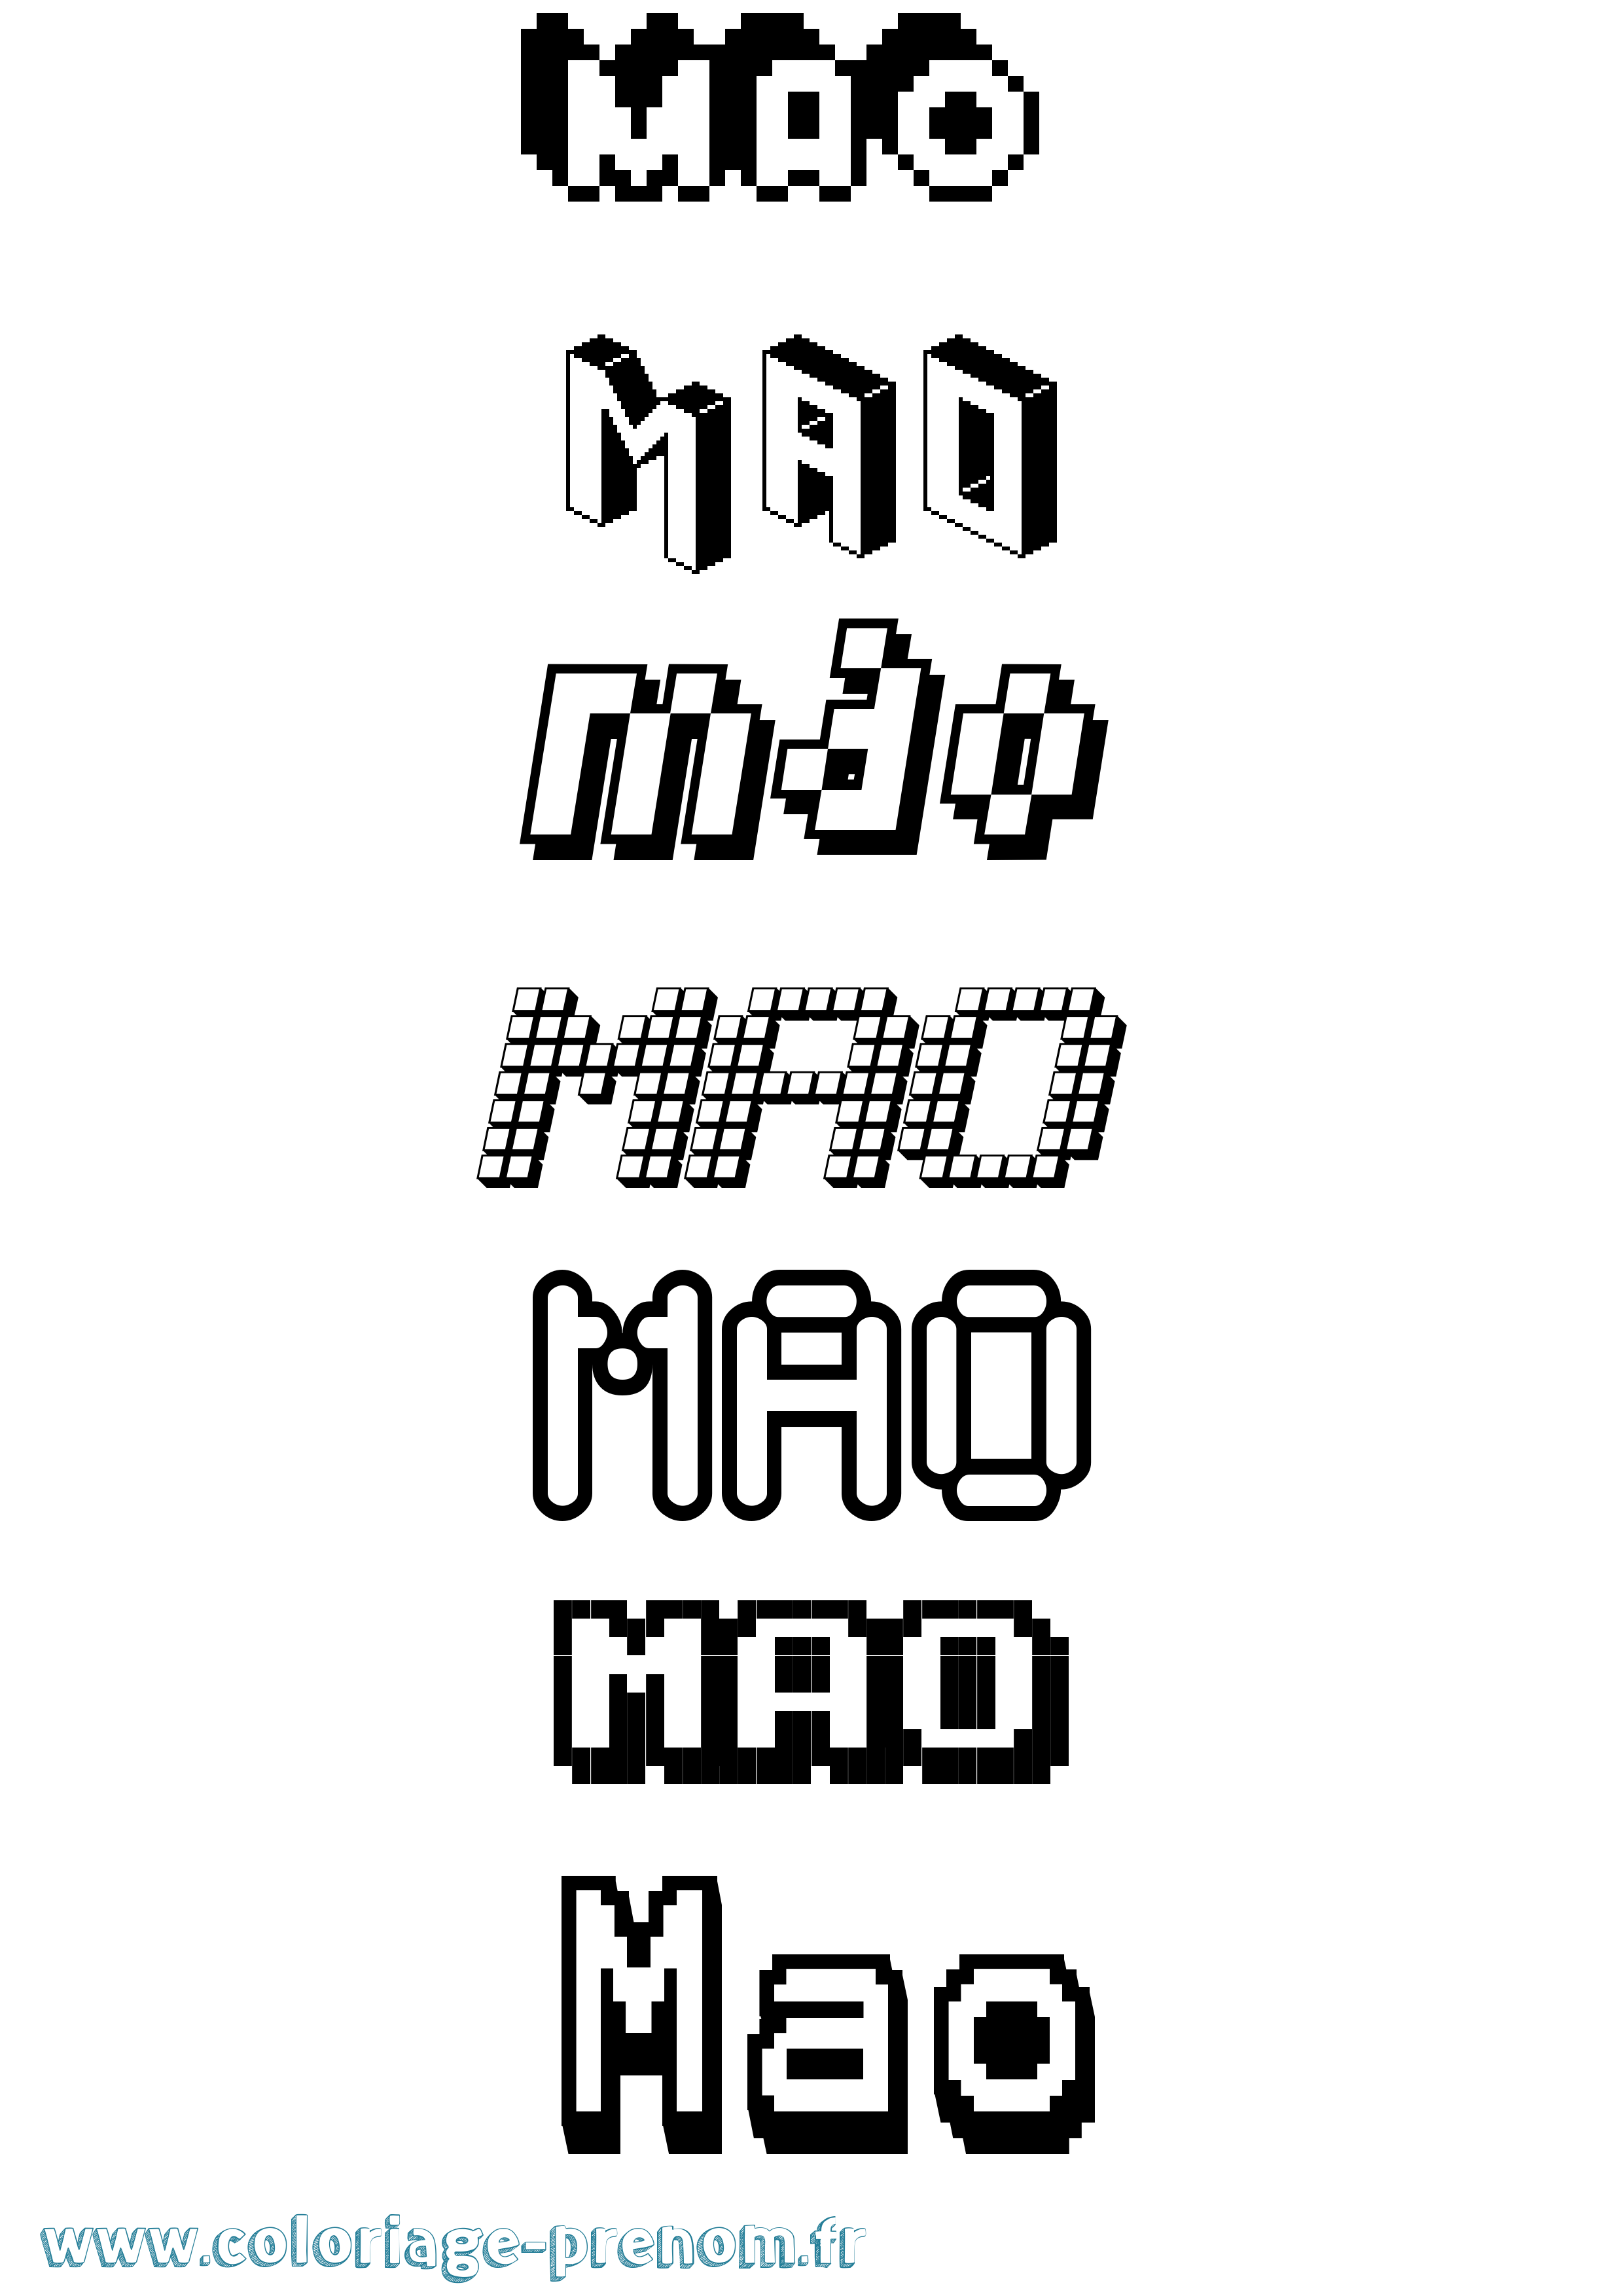 Coloriage prénom Mao Pixel